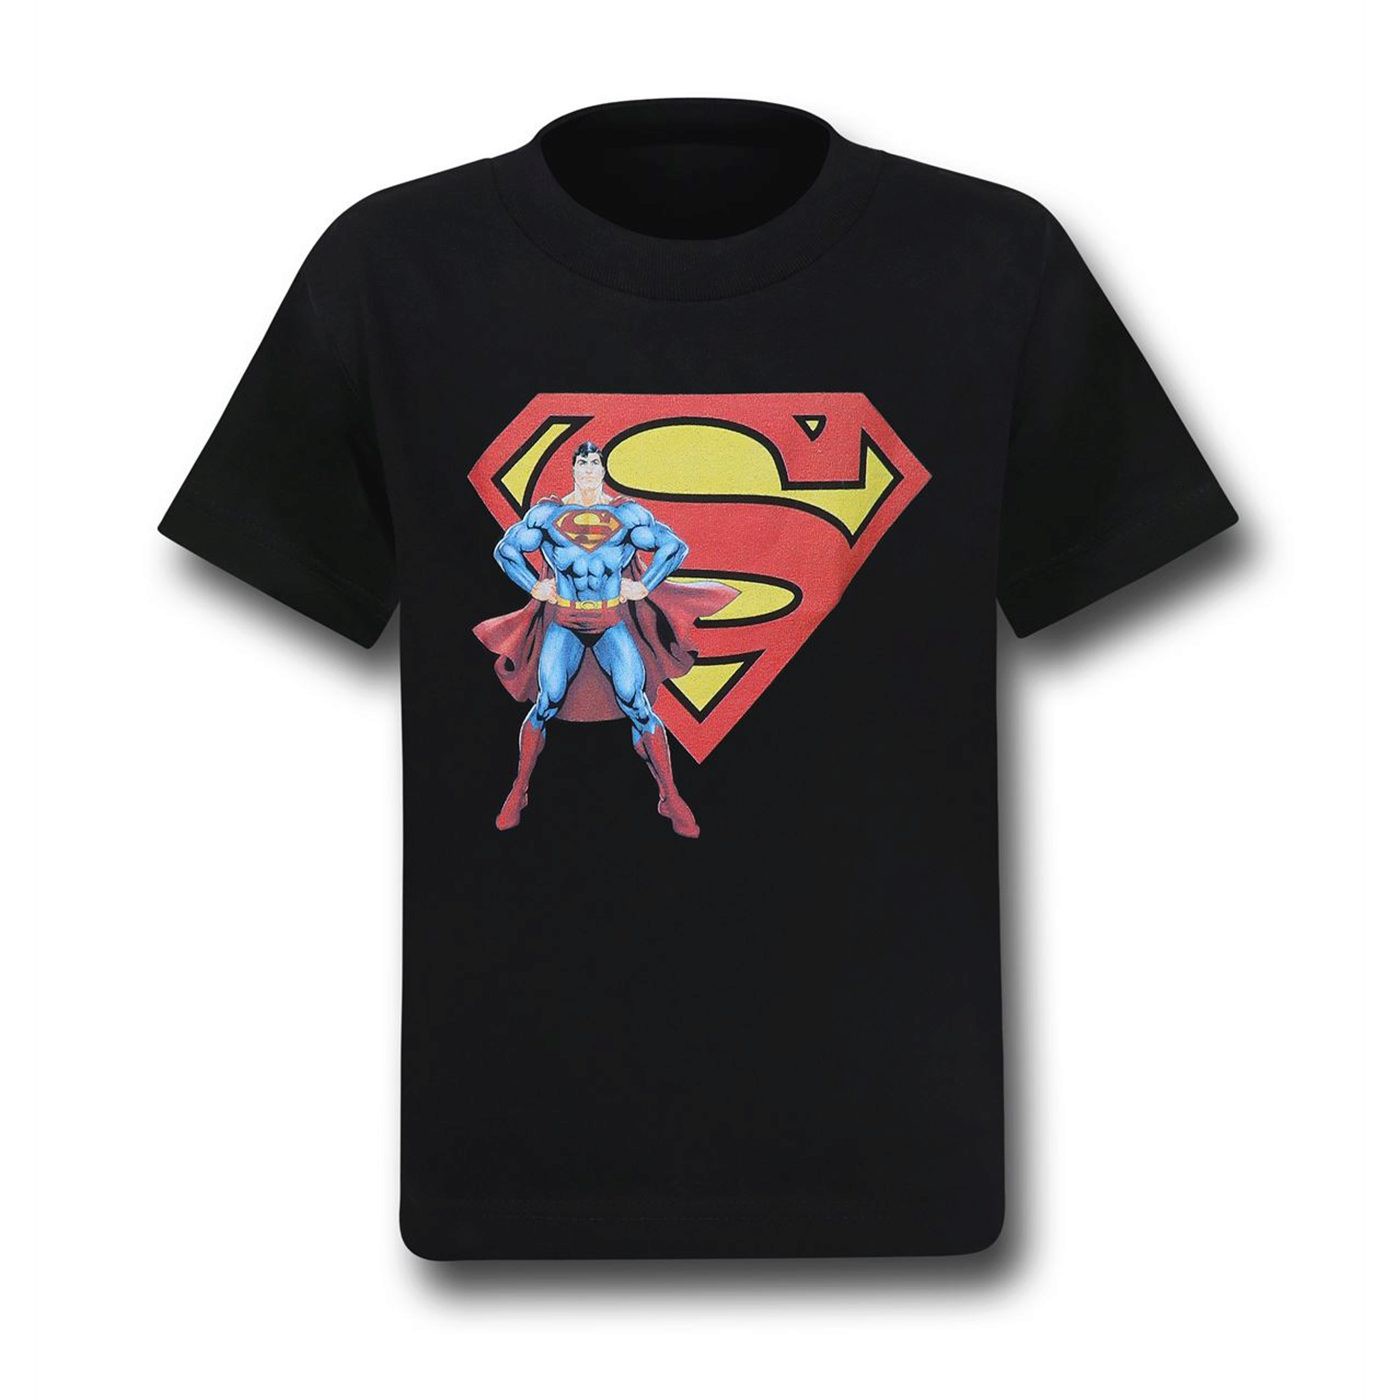 Superman Stance and Symbol Kids T-Shirt